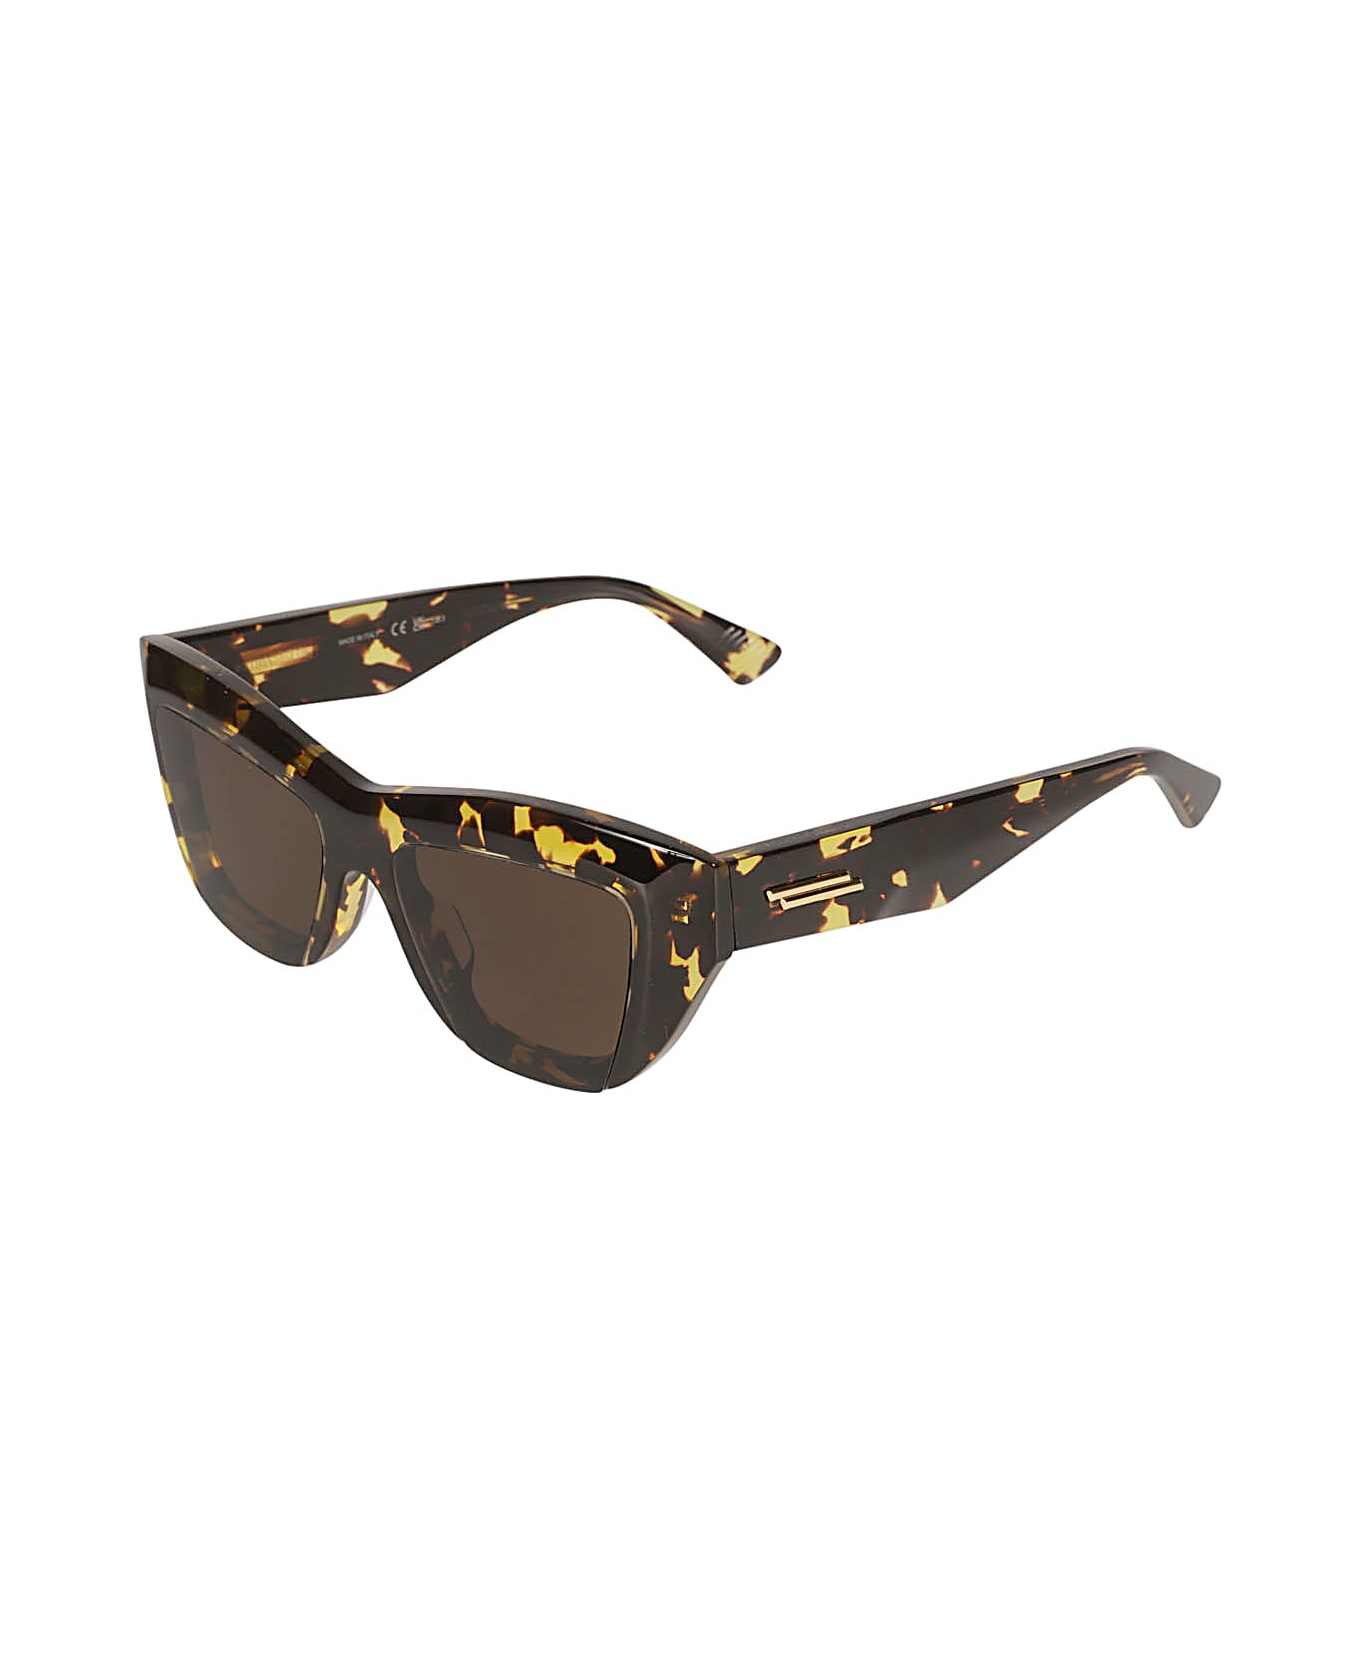 Bottega Veneta Eyewear Square Frame Flame Effect Sunglasses - Havana/Brown サングラス